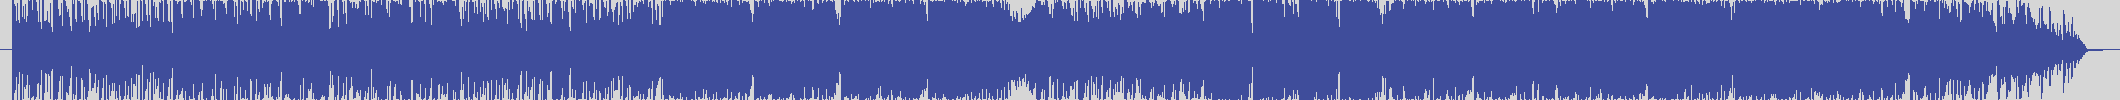 upr [UPR052] Monolog - Antispectacular [Original Mix] audio wave form